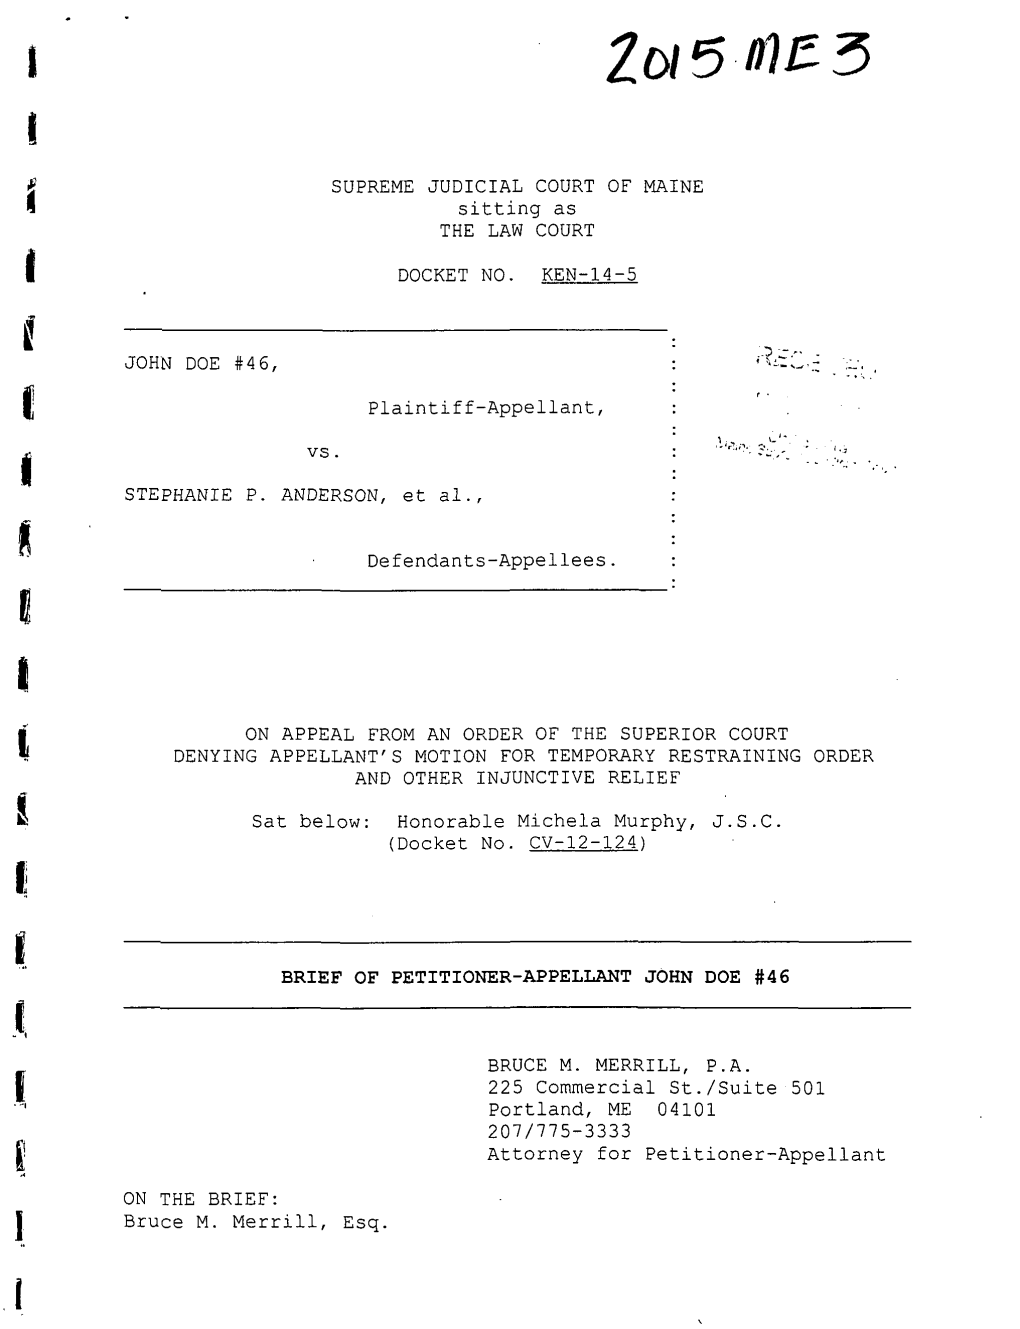 Brief of Petitioner-Appellant John Doe #46